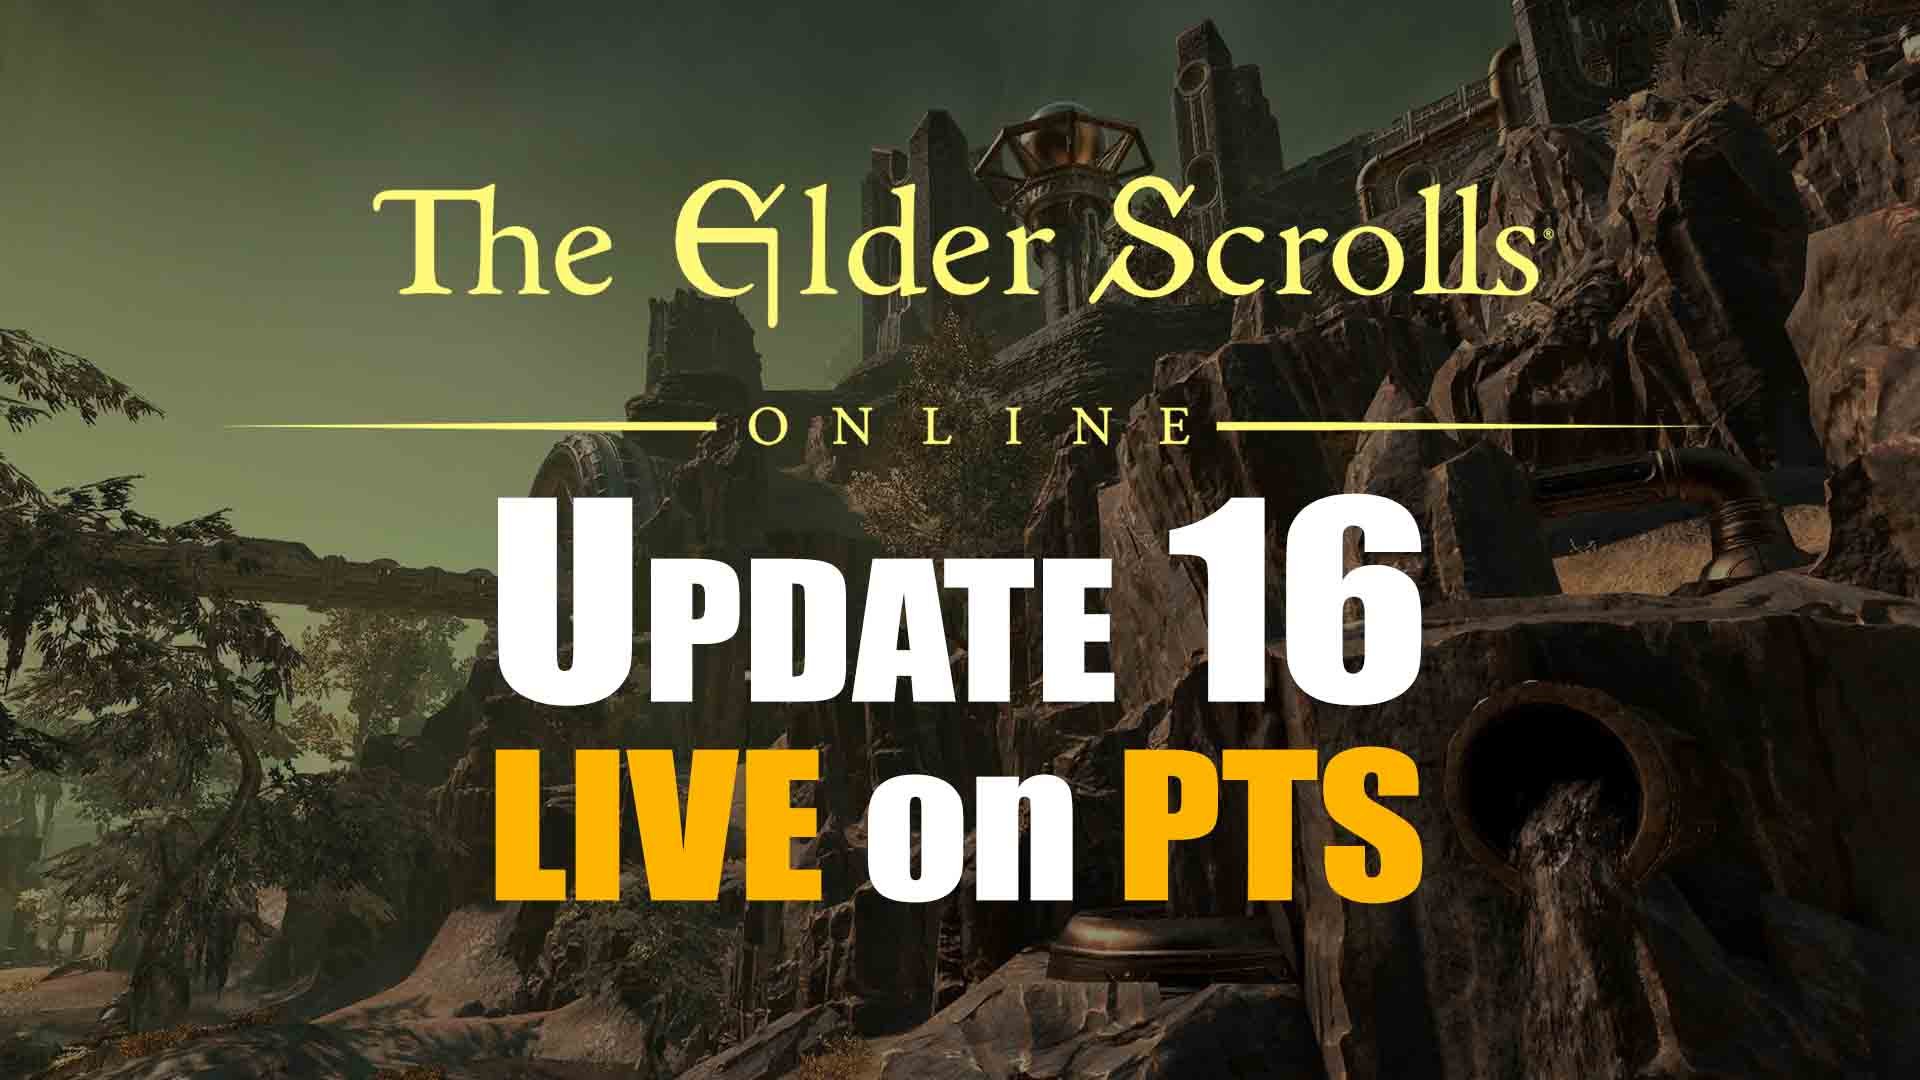 the-elder-scrolls-online-update-16-clockwork-cty-dlc-live-pts